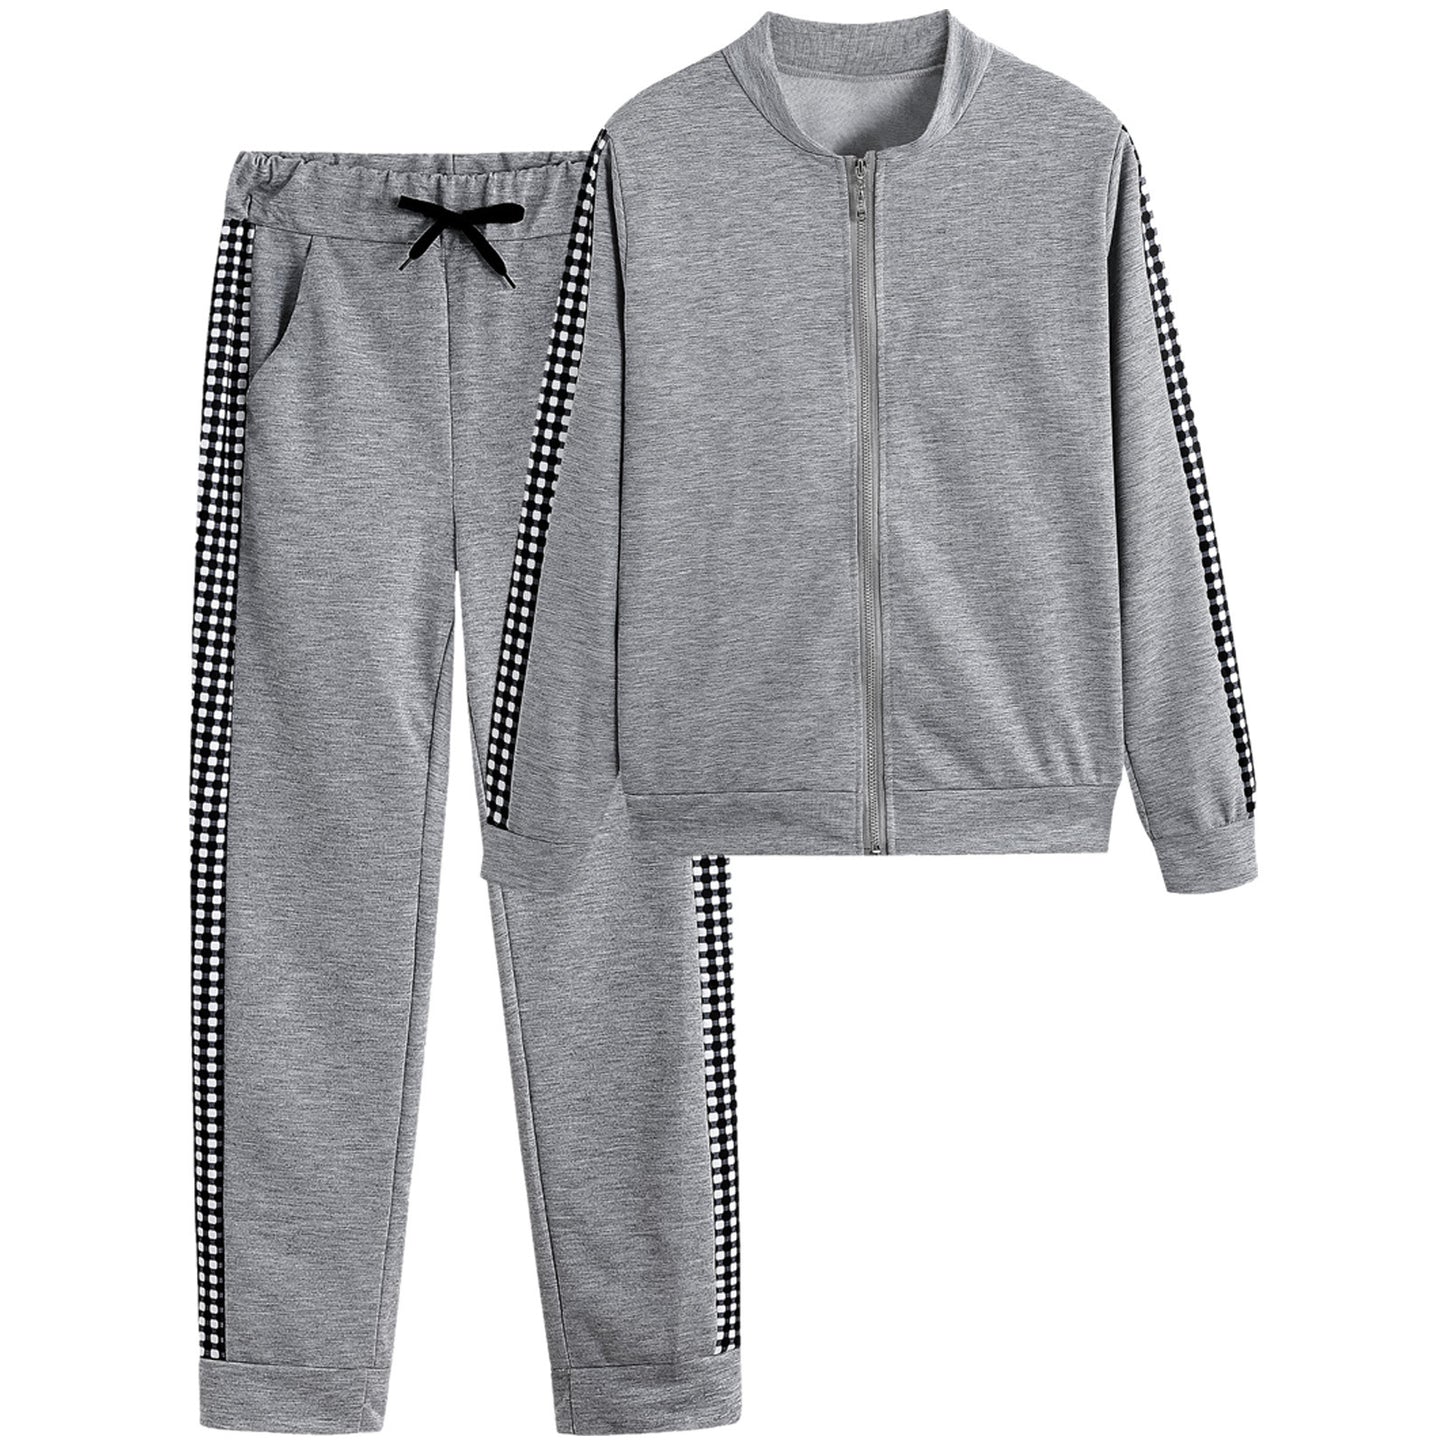 Women's Set Tracksuit Long Sleeve Sportswear ZIp Sweatshirt Pants Suit Two Piece Set Outfits